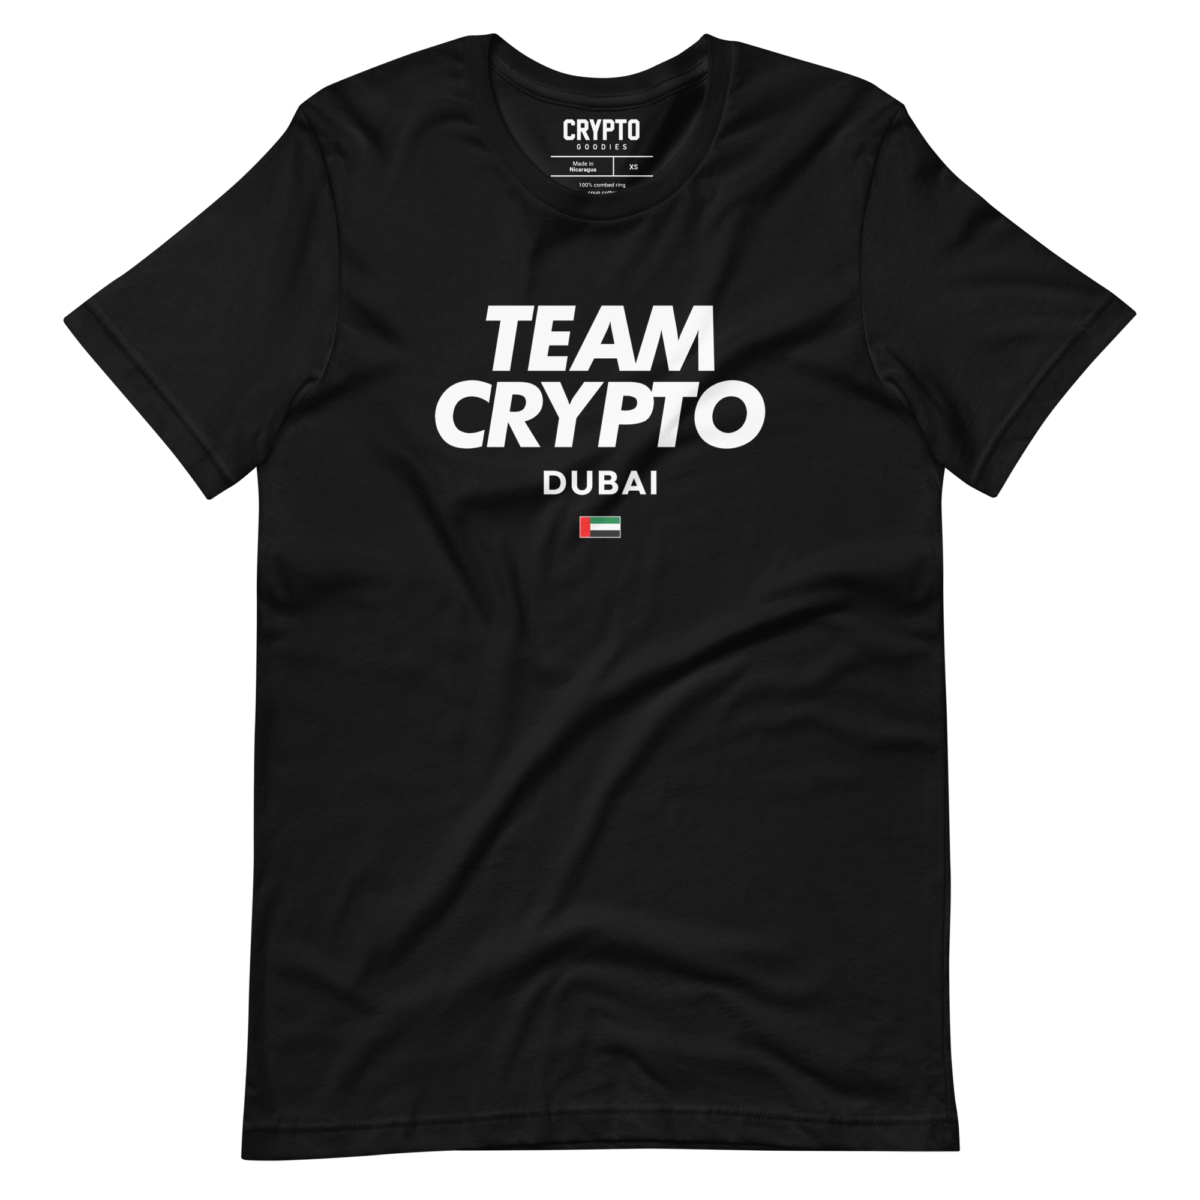 unisex staple t shirt black front 63a2361cafa94 - Team Crypto Dubai T-Shirt